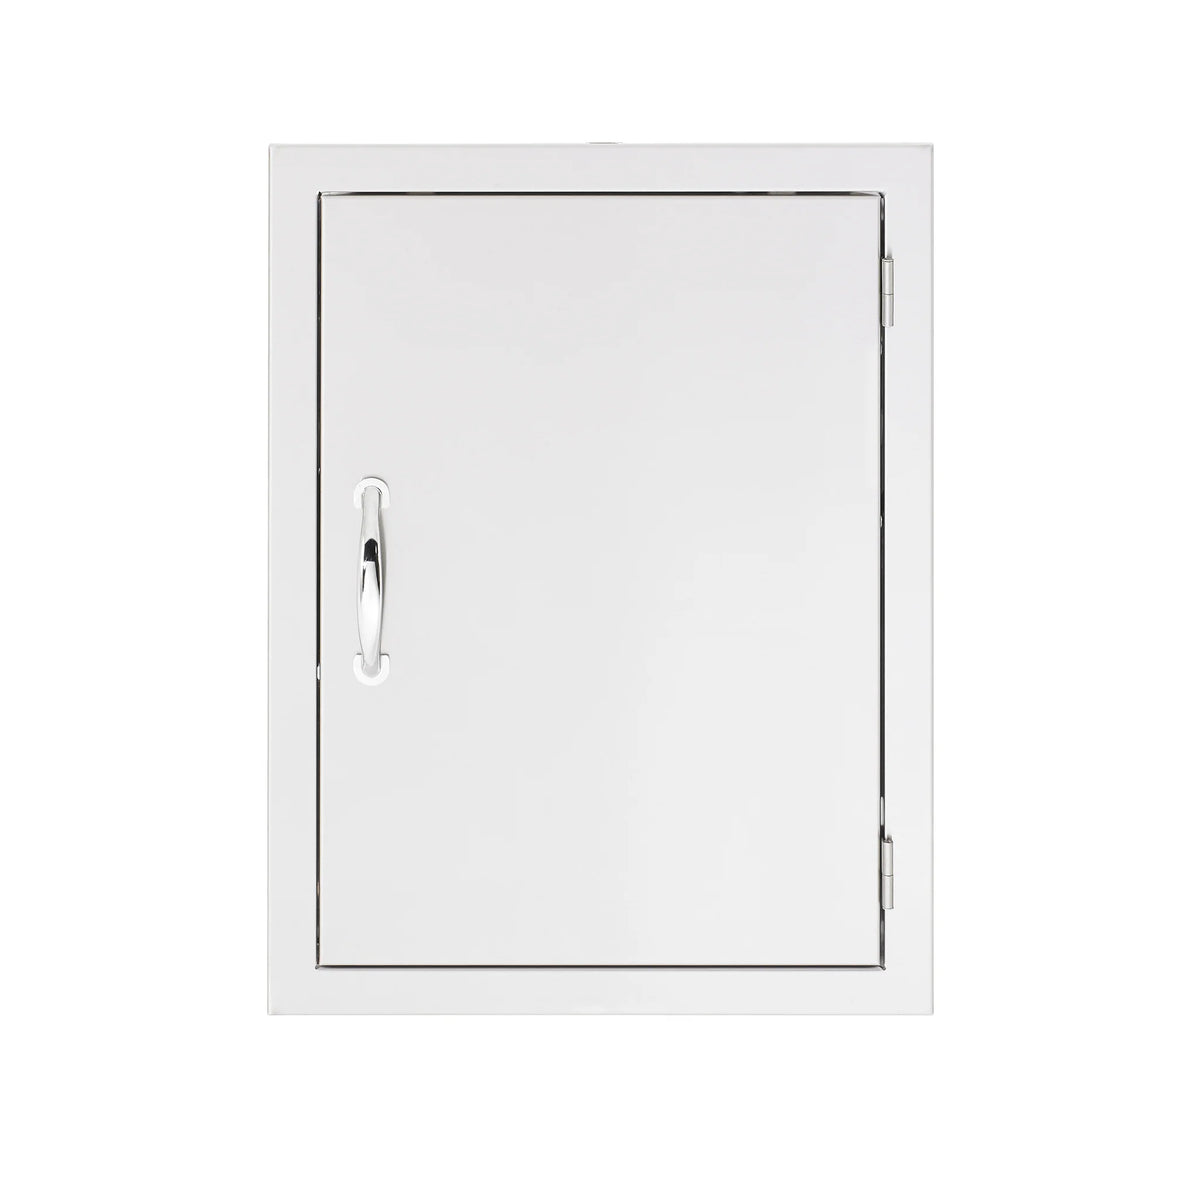 Summerset - 20 x 27 Inch Stainless Steel Vertical Access Door - SSDV-20